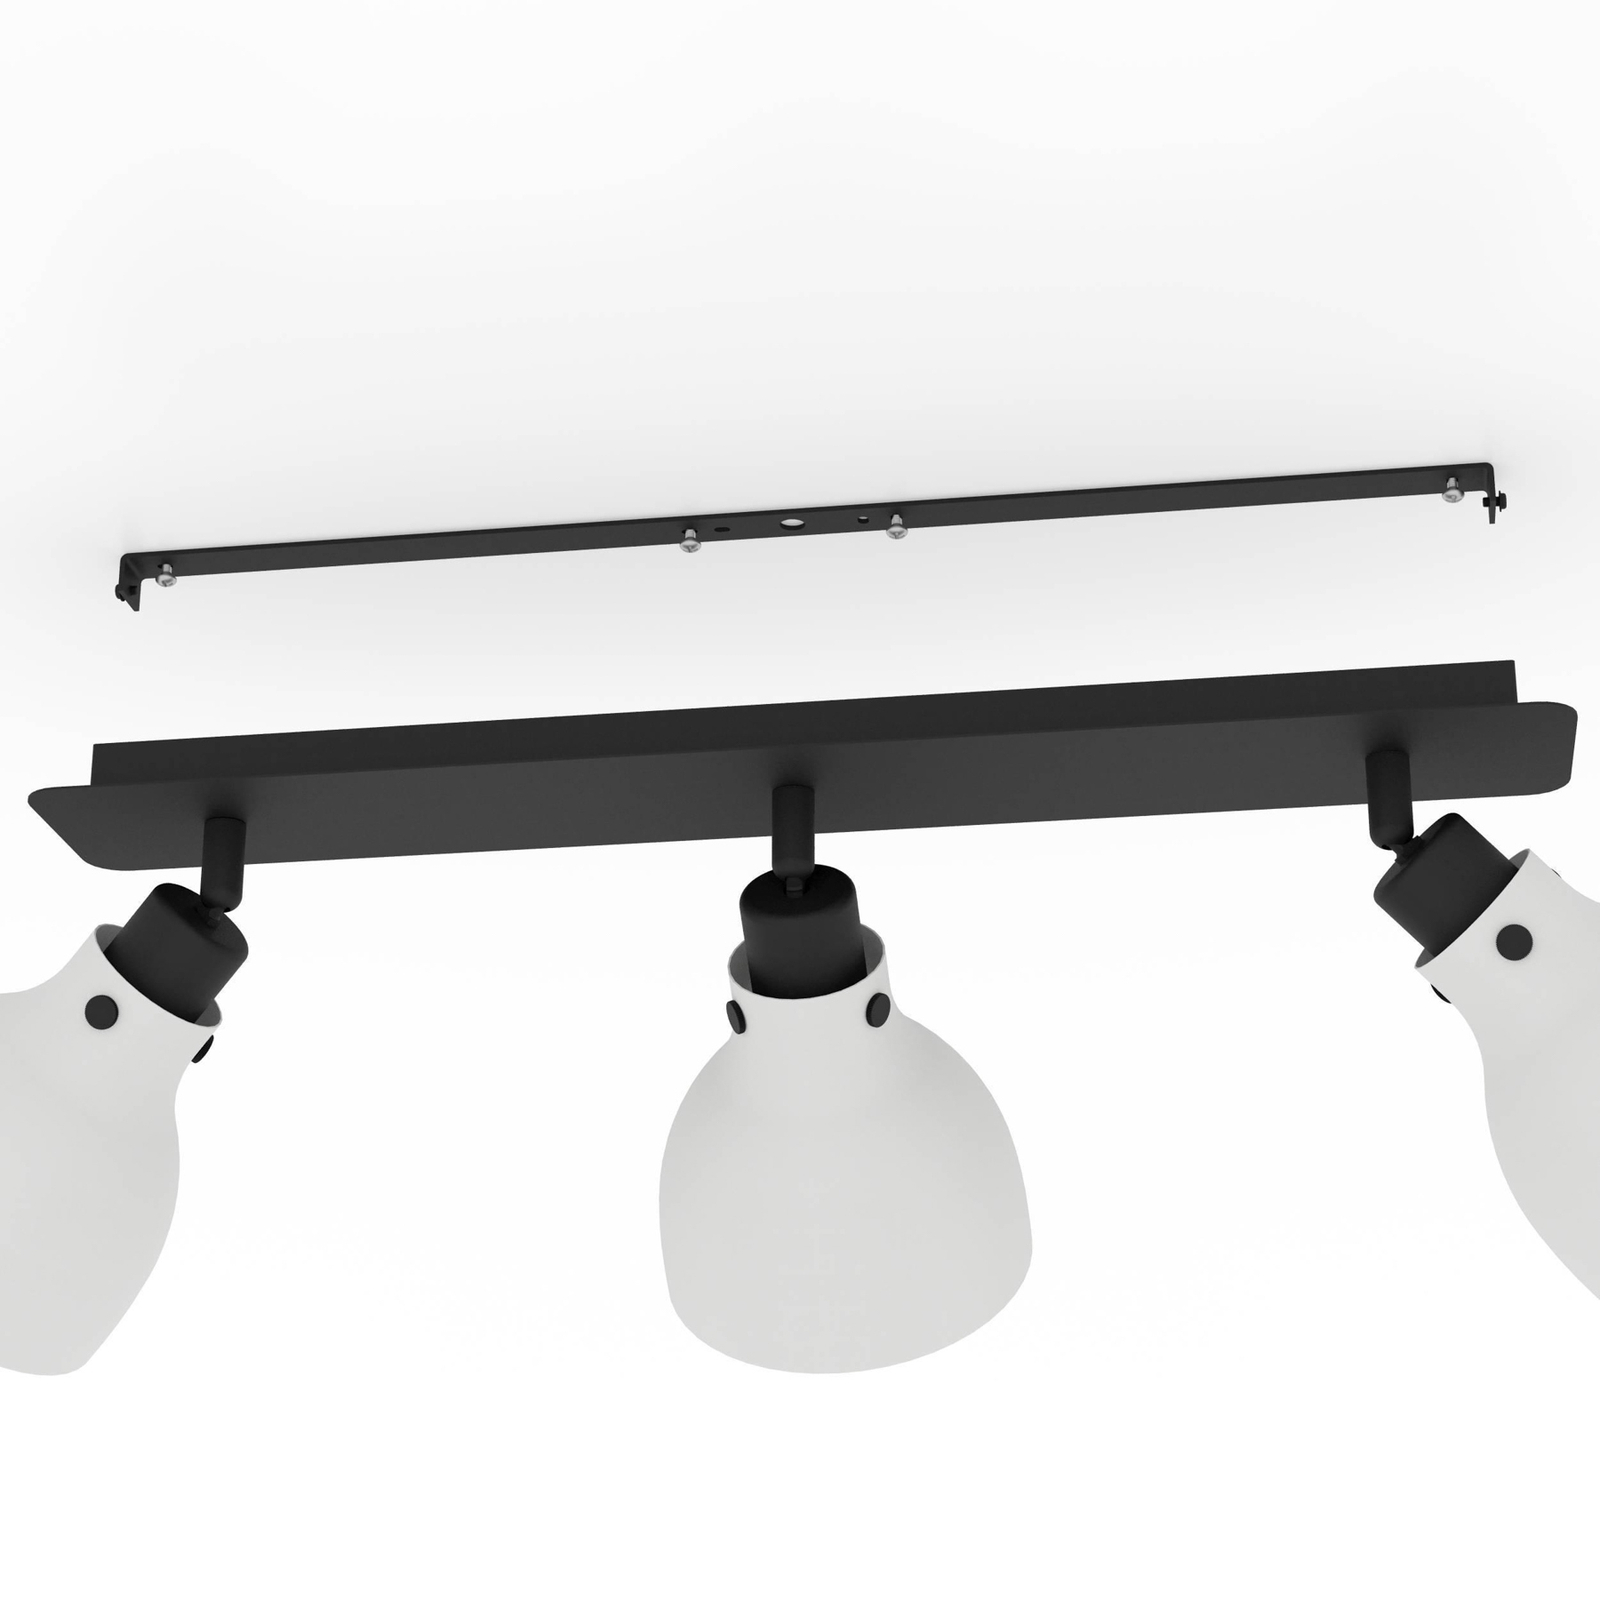 Matlock downlight, length 74 cm, grey/black, 3-bulb.